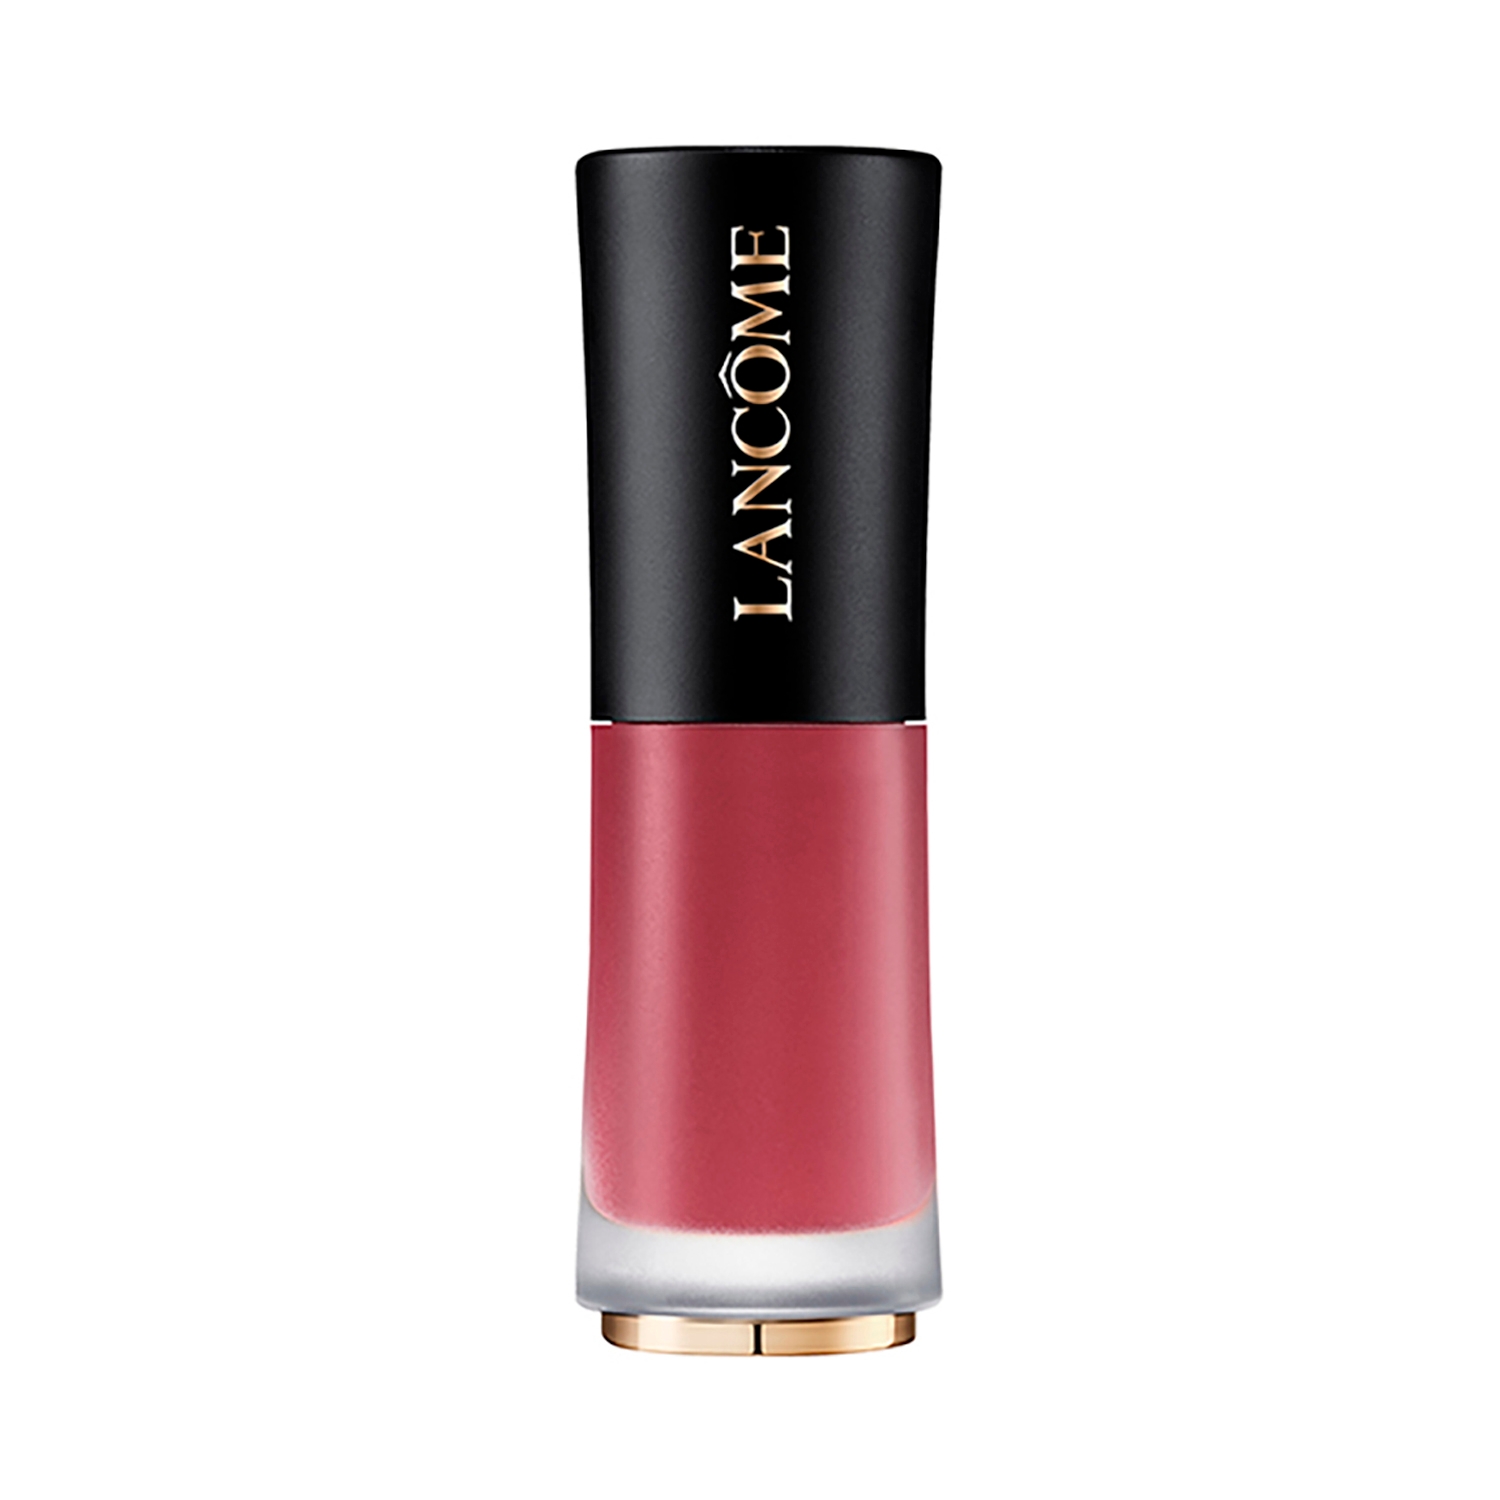 Lancome | Lancome L'Absolu Rouge Drama Ink Semi-Matte Liquid Lipstick - 270 Peau Contre Peau (6ml)